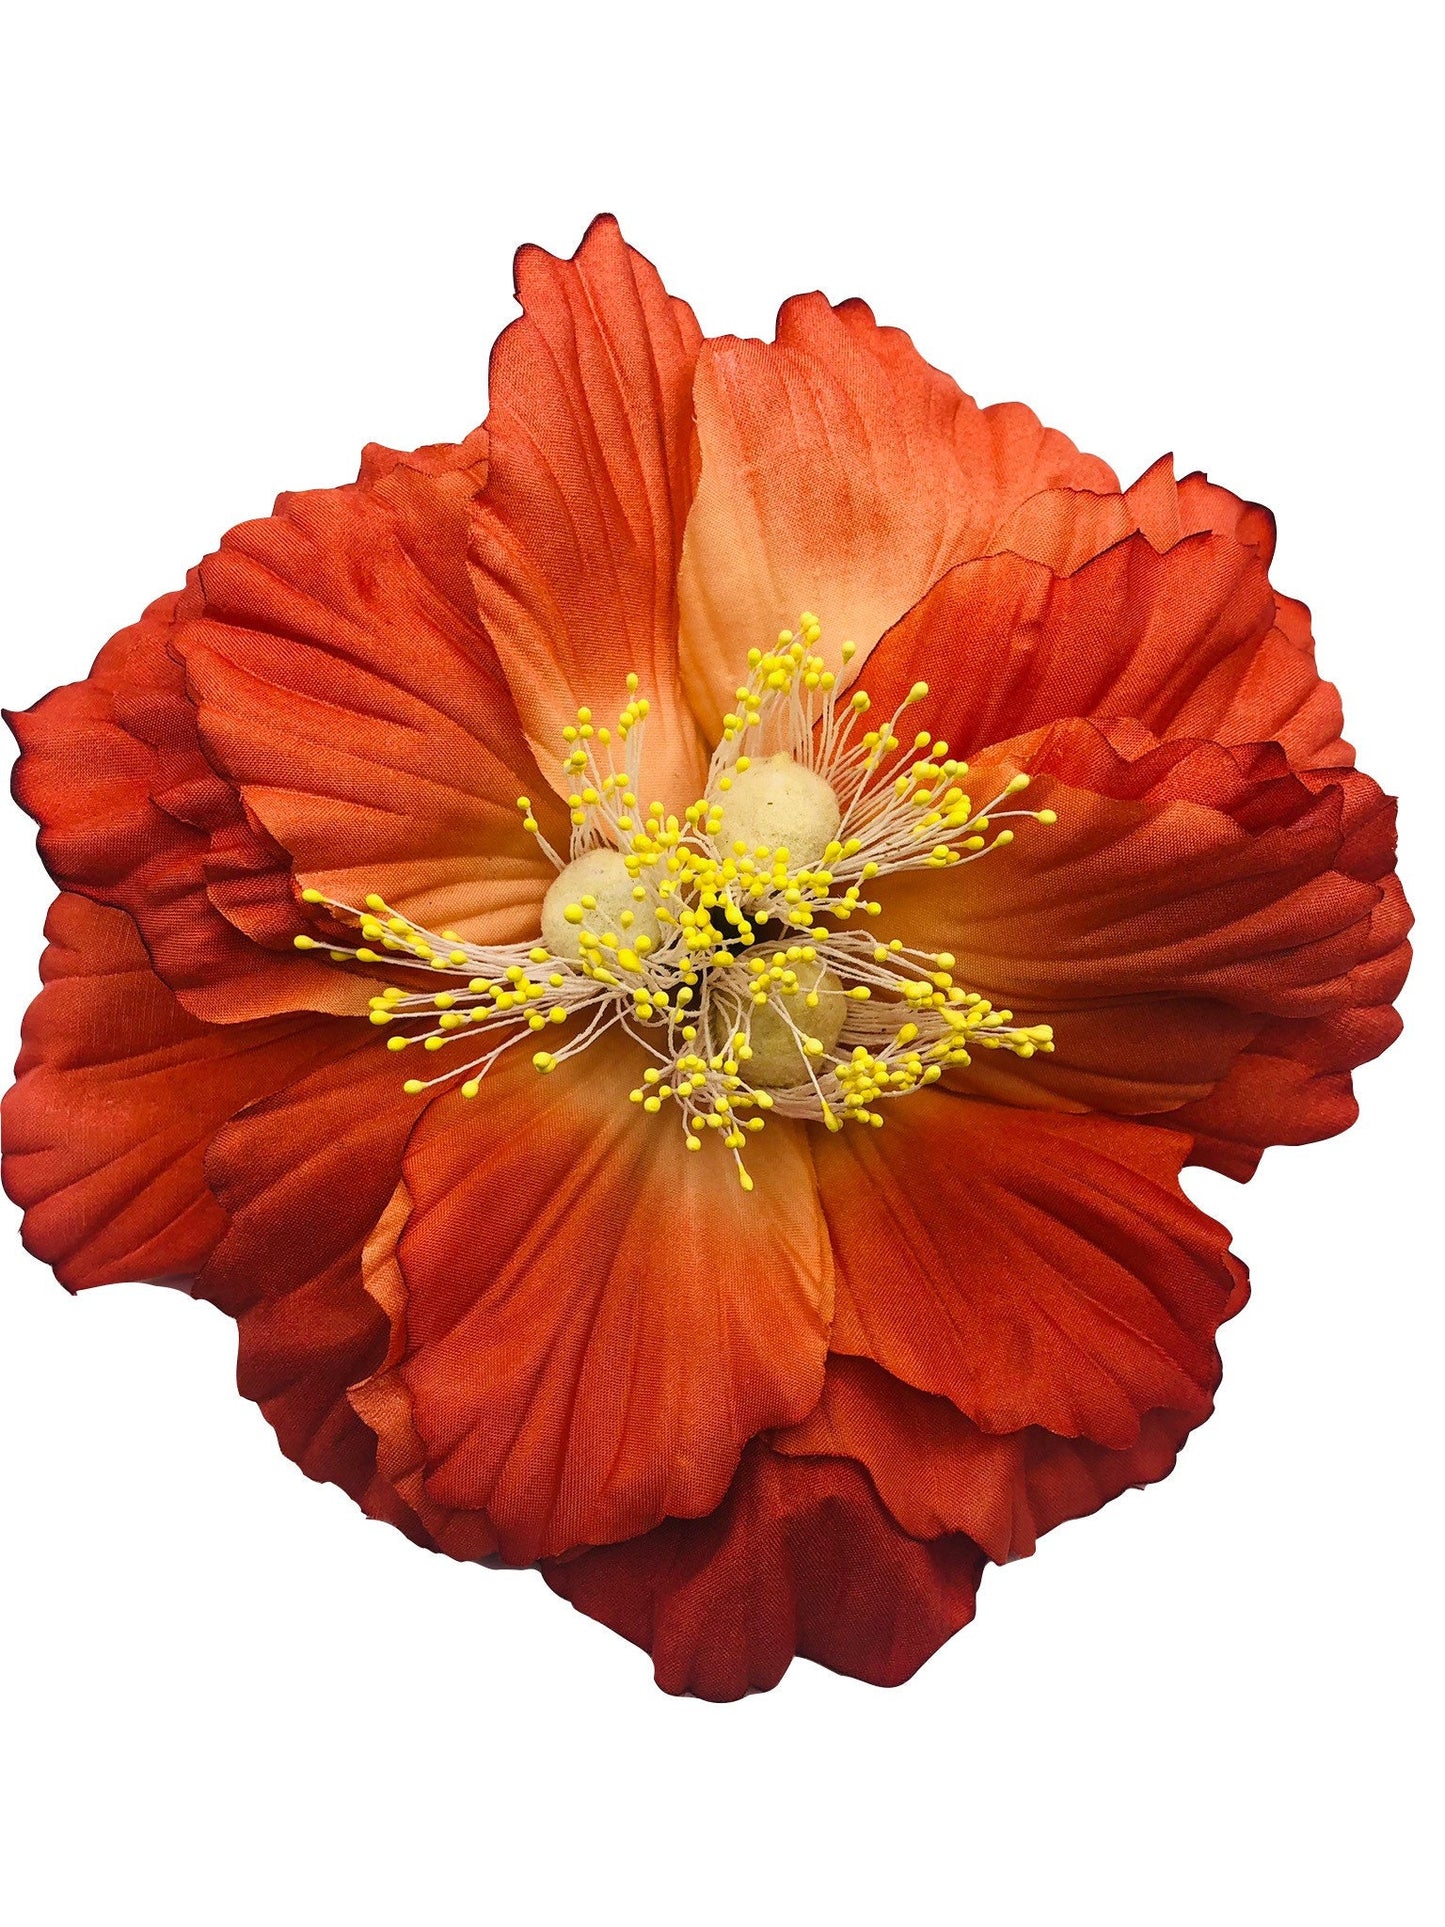 Karin's Garden Pince à pincer en forme de fleur d'hibiscus de 20,3 cm.